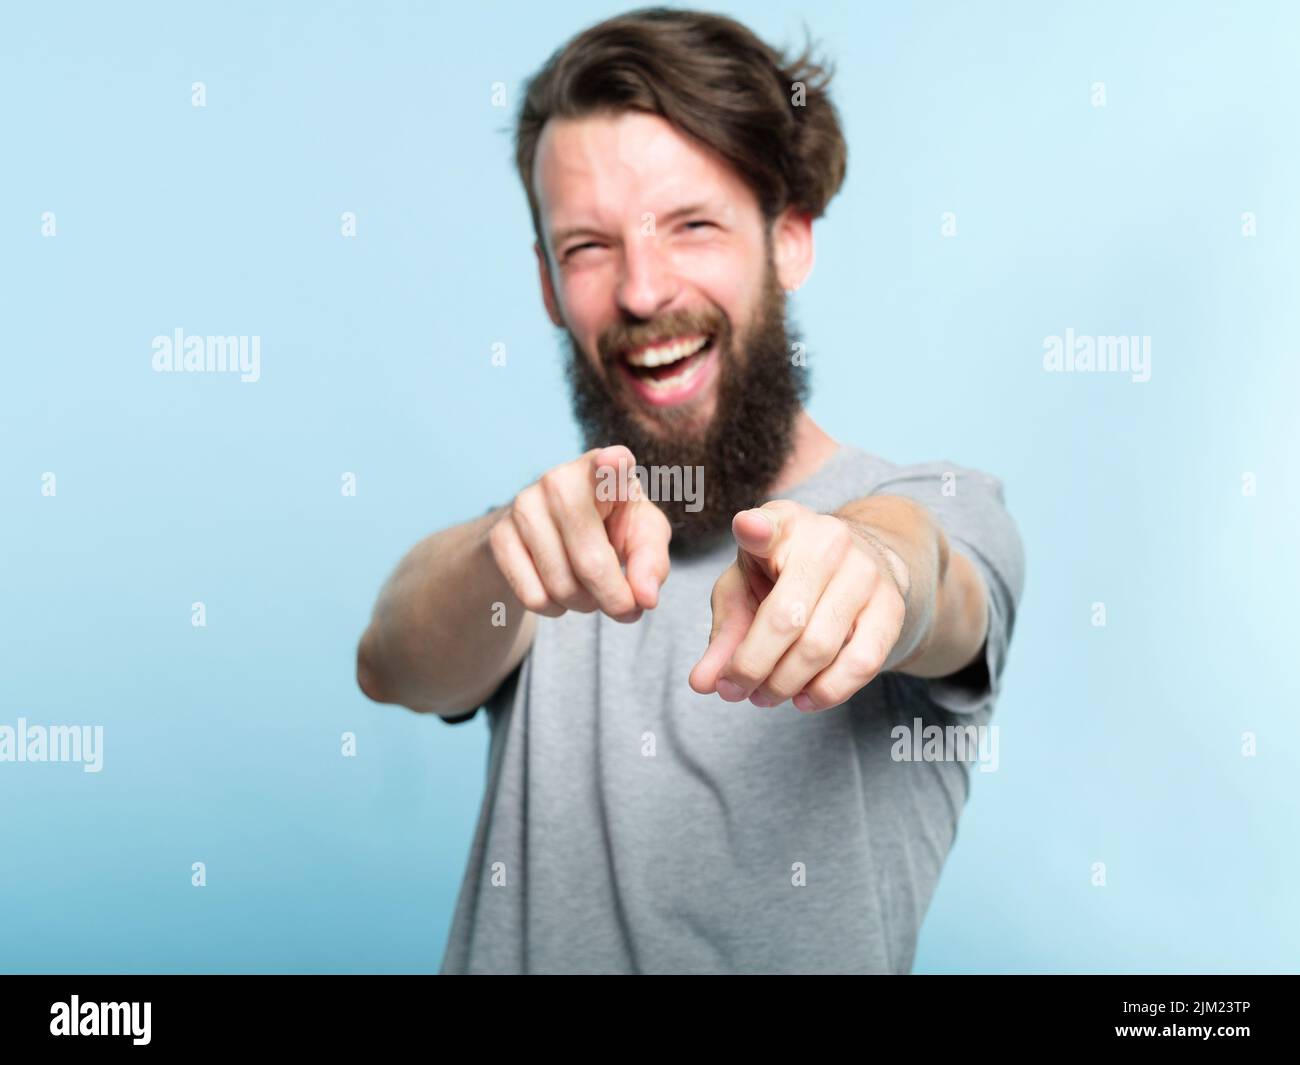 loser man mocking laugh point finger humiliation Stock Photo